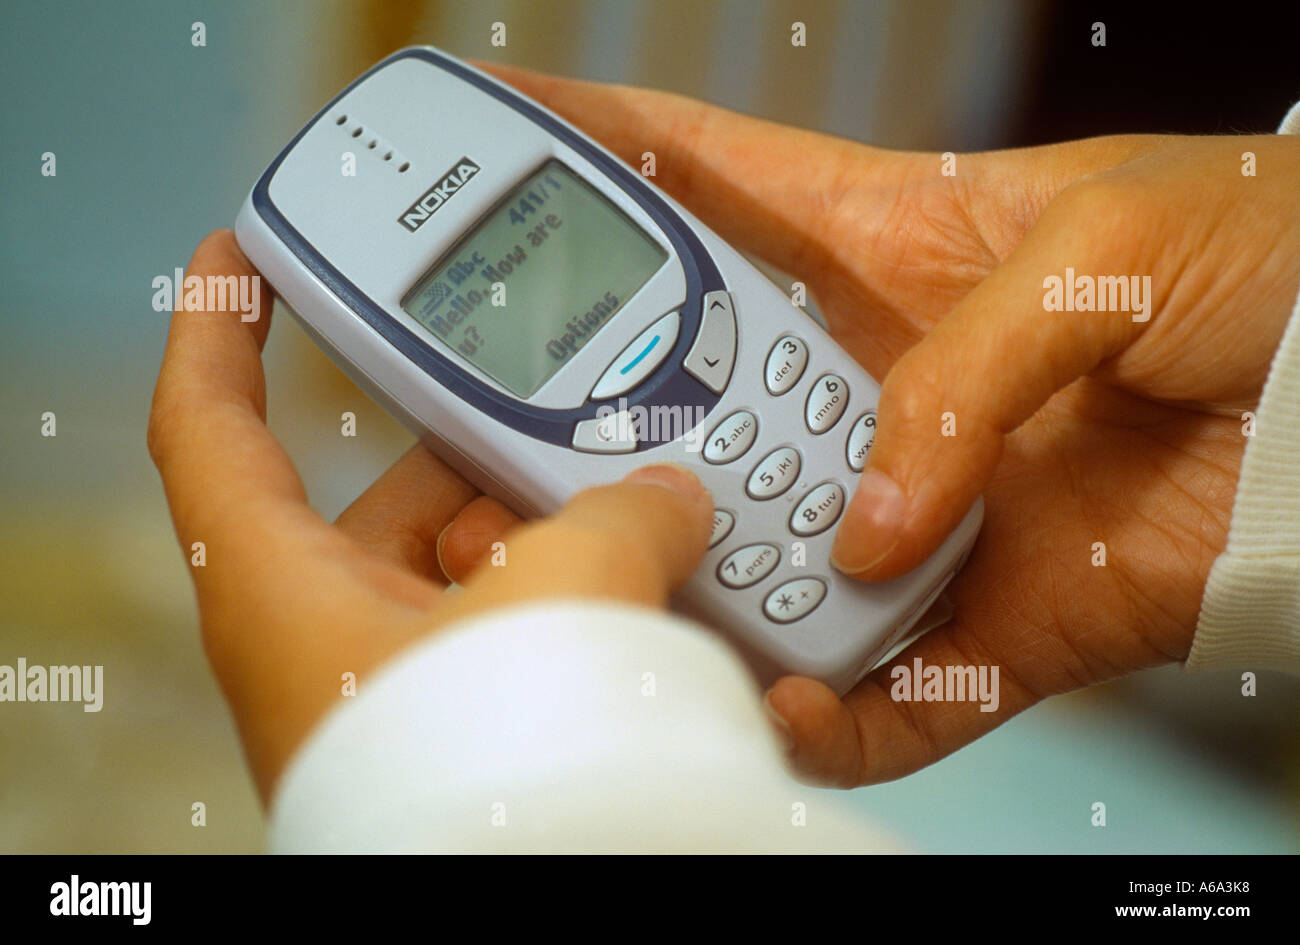 Sending Text Message On Mobile Phone Nokia 3310 Stock Photo